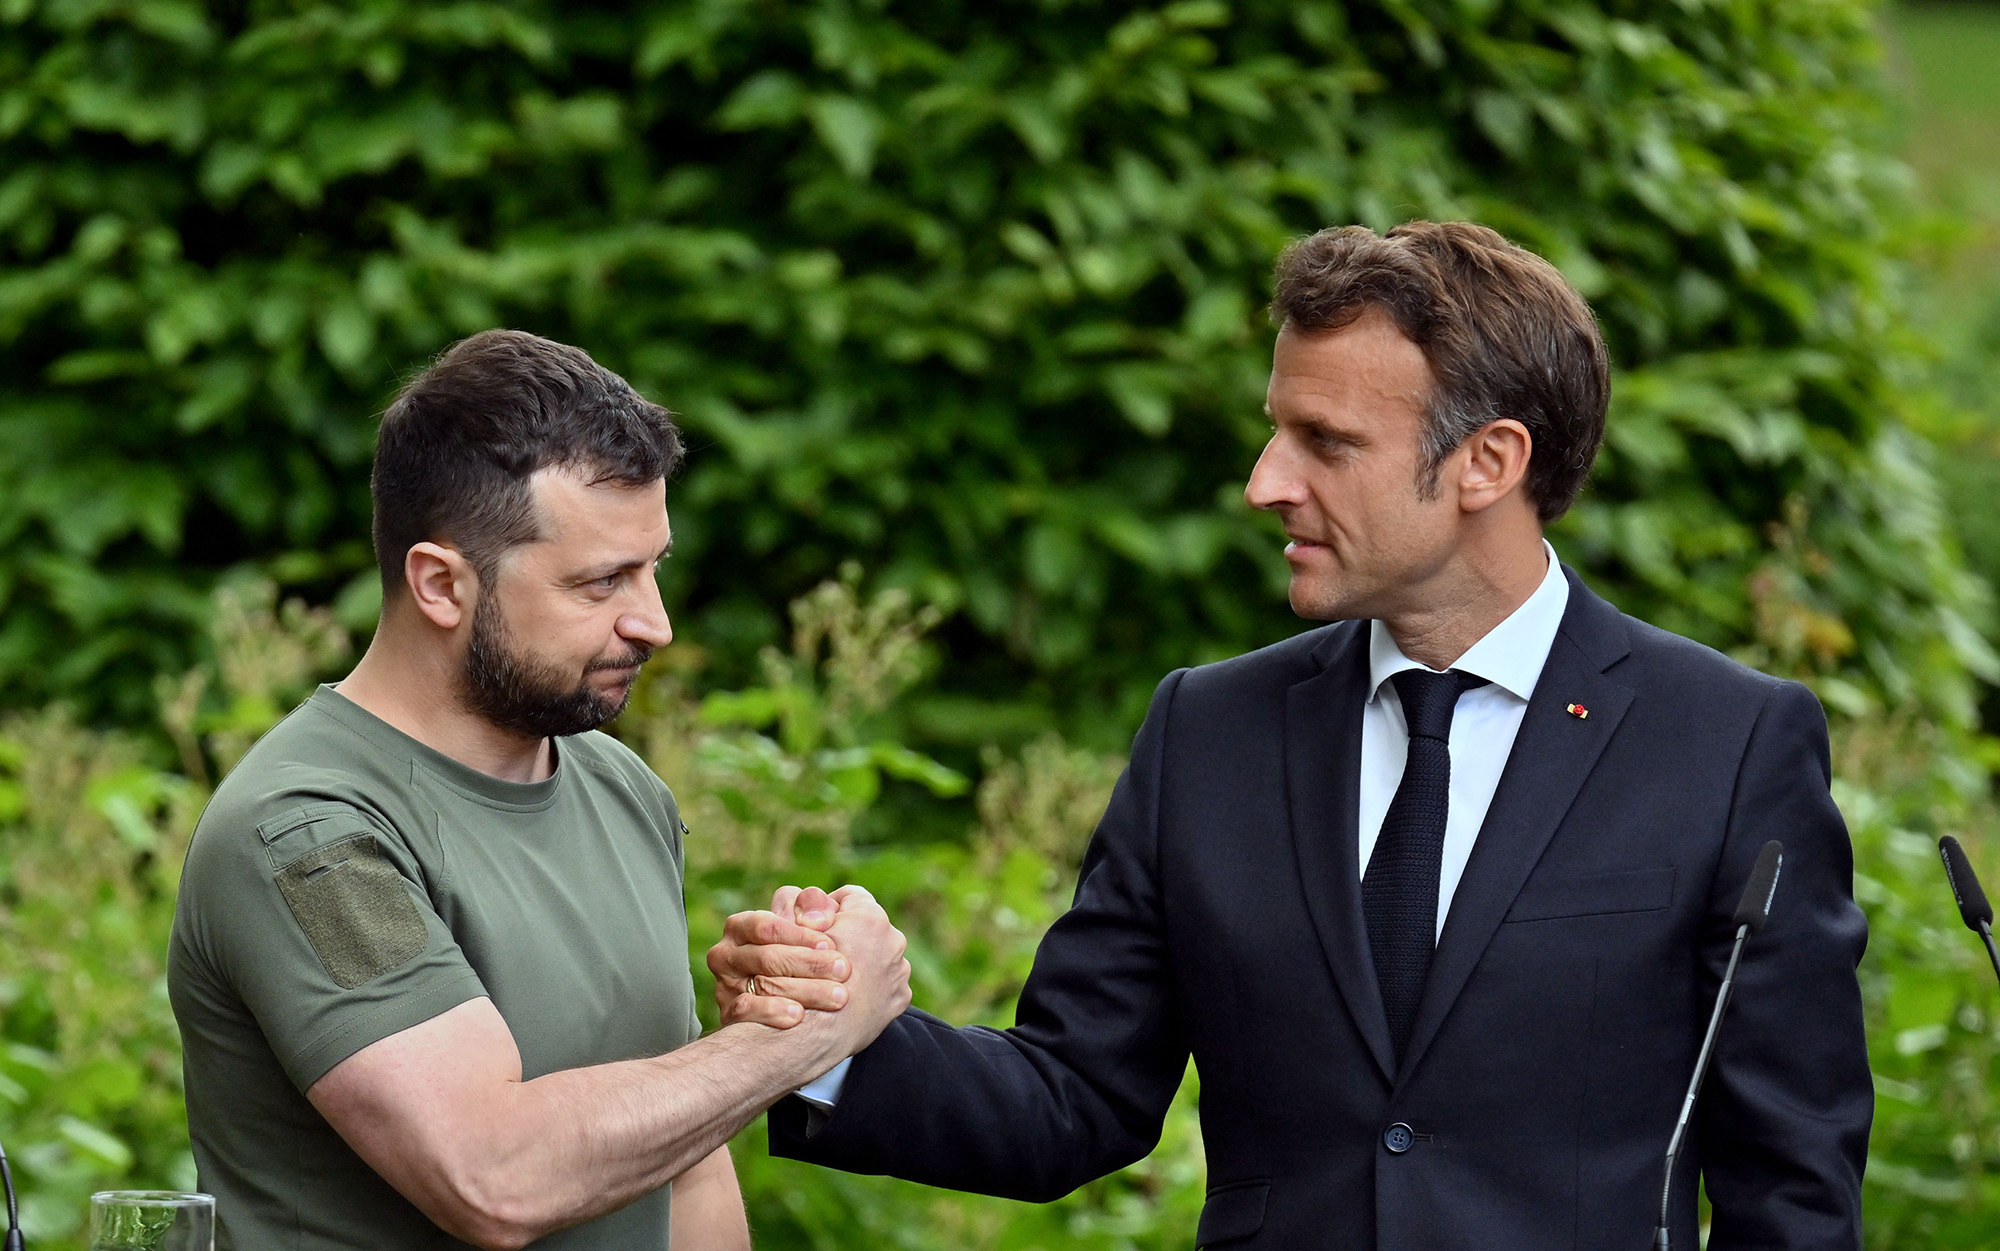 Ukrainian President Volodymyr Zelensky, left, and French President Emmanuel Macron shake hands after giving a news conference in Kyiv, Ukraine, on June 16.